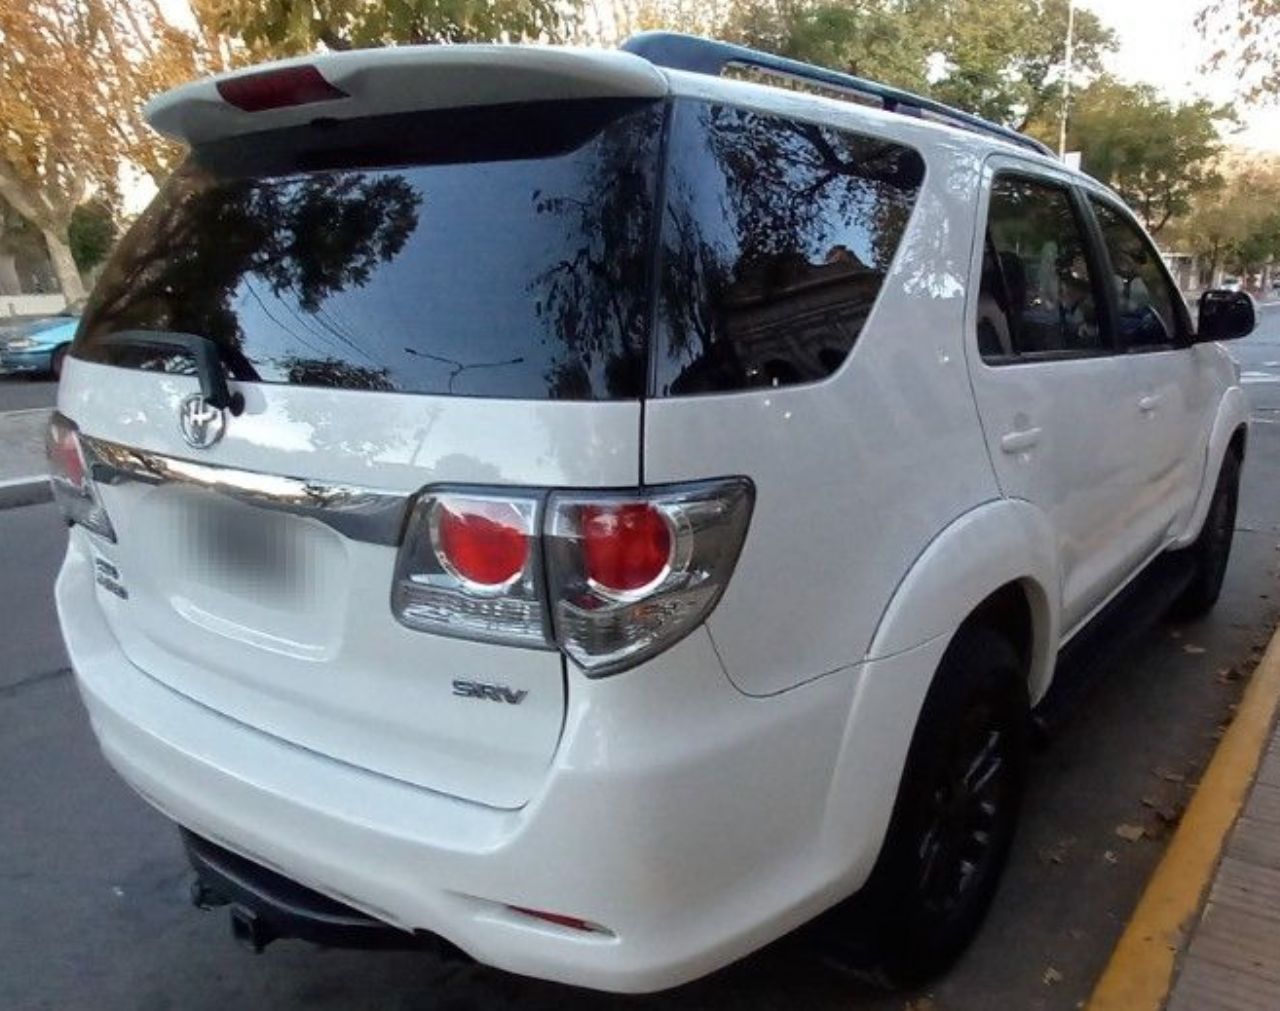 Toyota Hilux SW4 Usado en San Juan, deRuedas